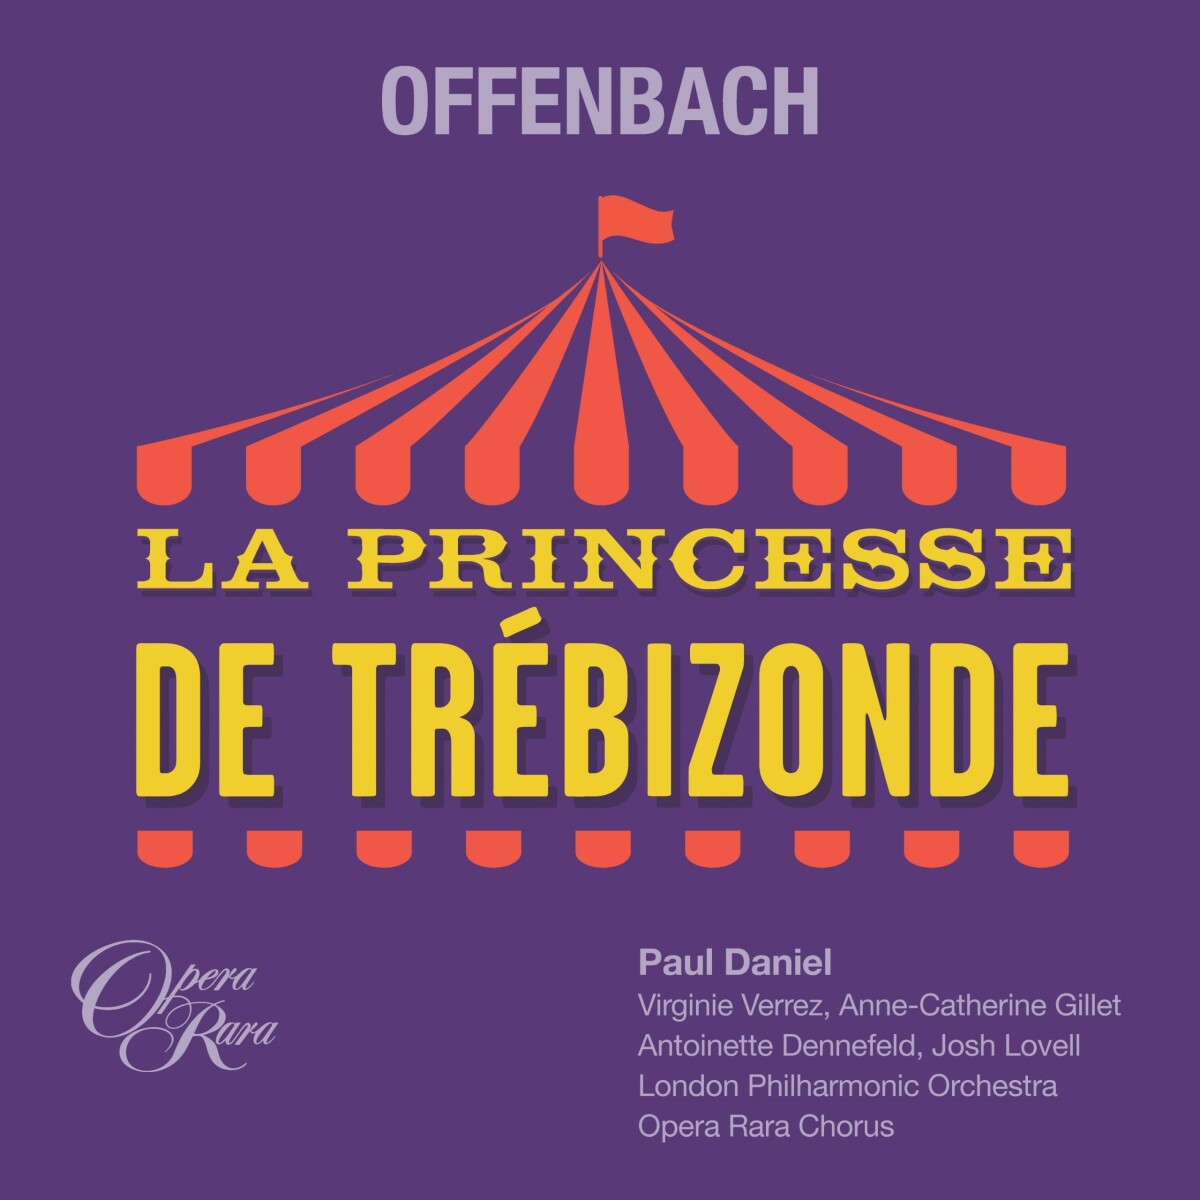 Offenbach's "La Princesse de Trebizonde" on Opera Rara. (Photo: Opera Rara)